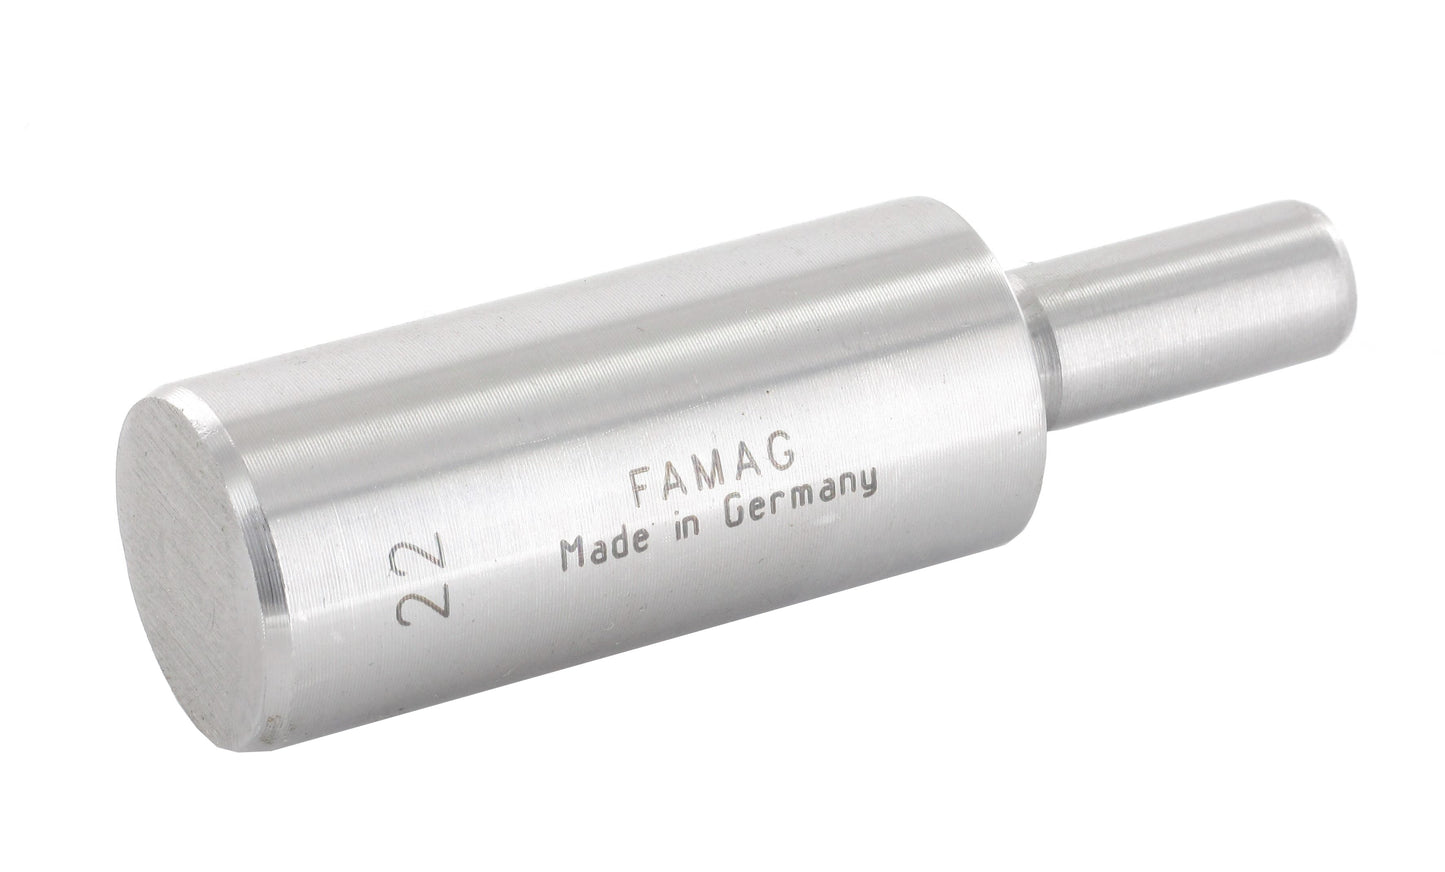 FAMAG 8 mm Guding Pin For Bormax 2.0 Prima 1614 Long Series 20mm - 40mm, 1619008